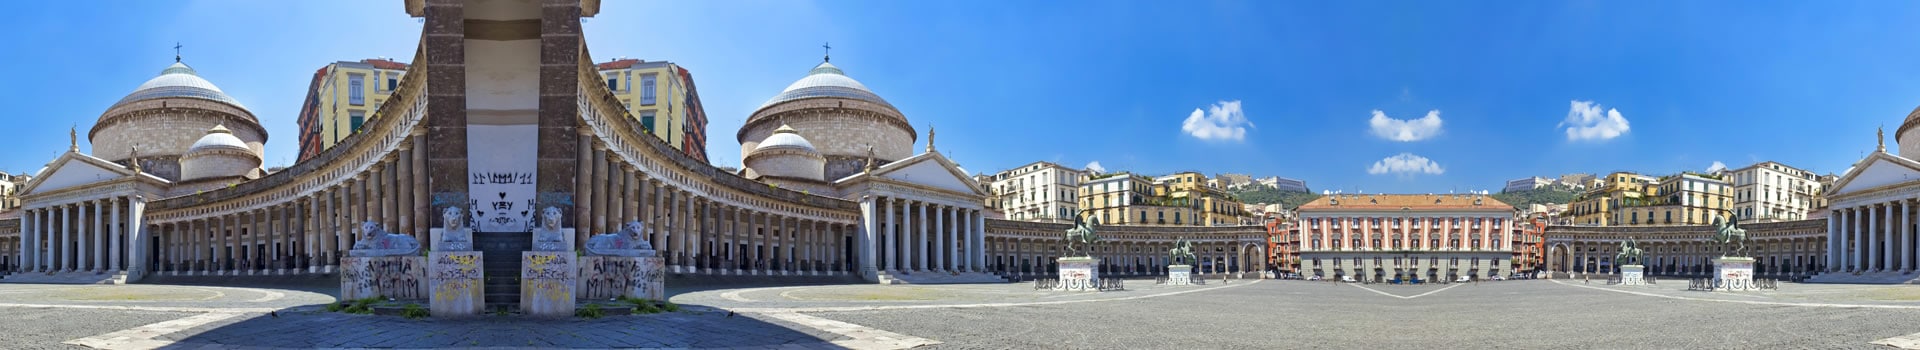 Palermo - Napoli